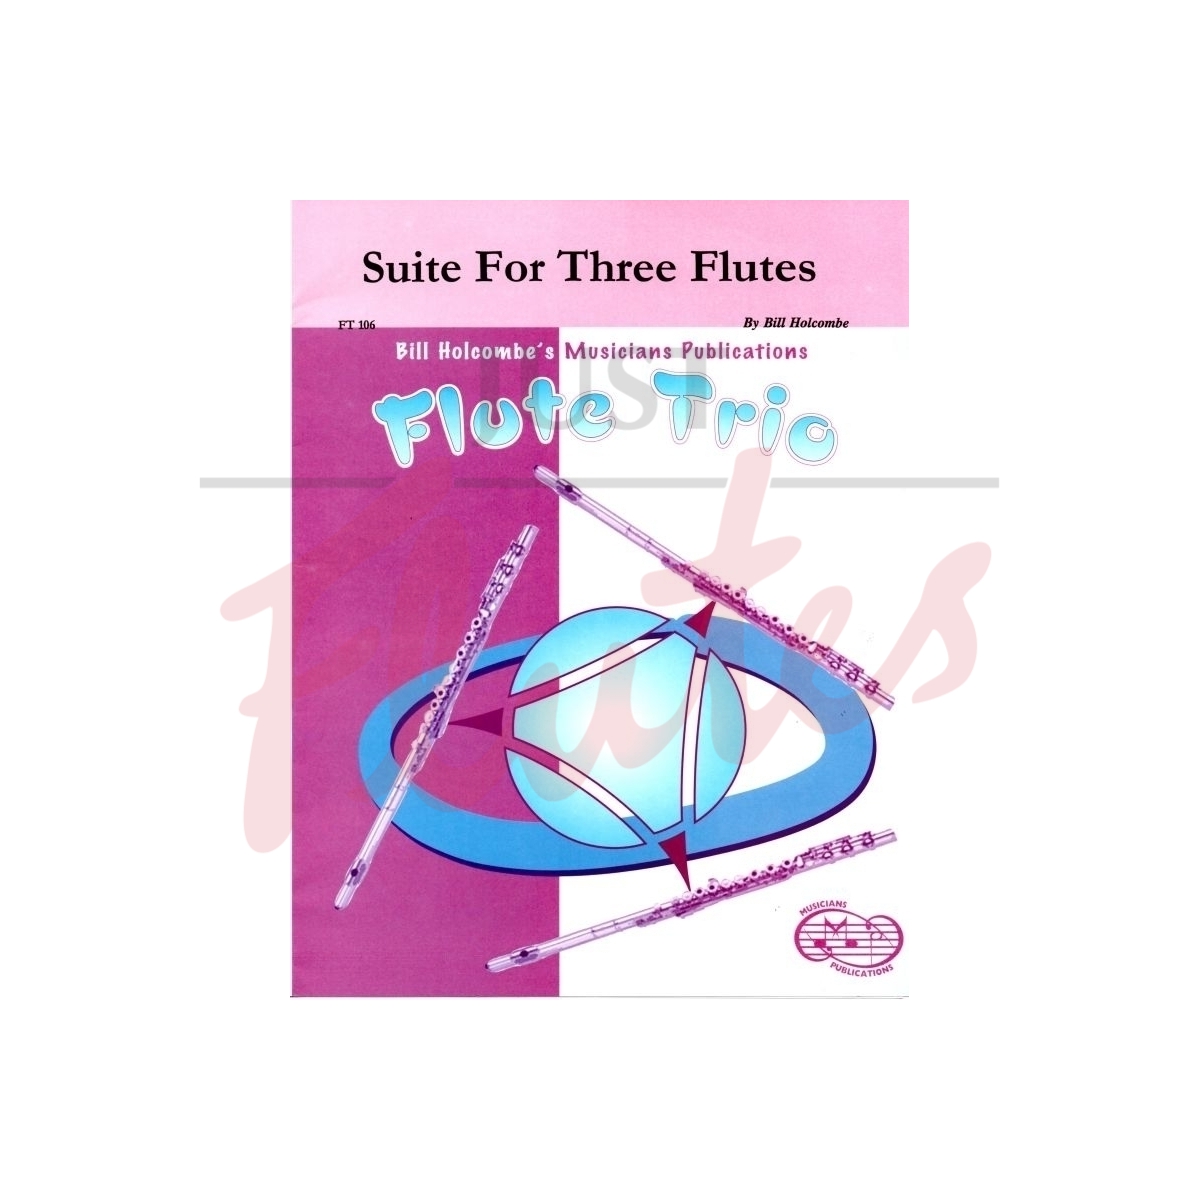 Suite for Three Flutes